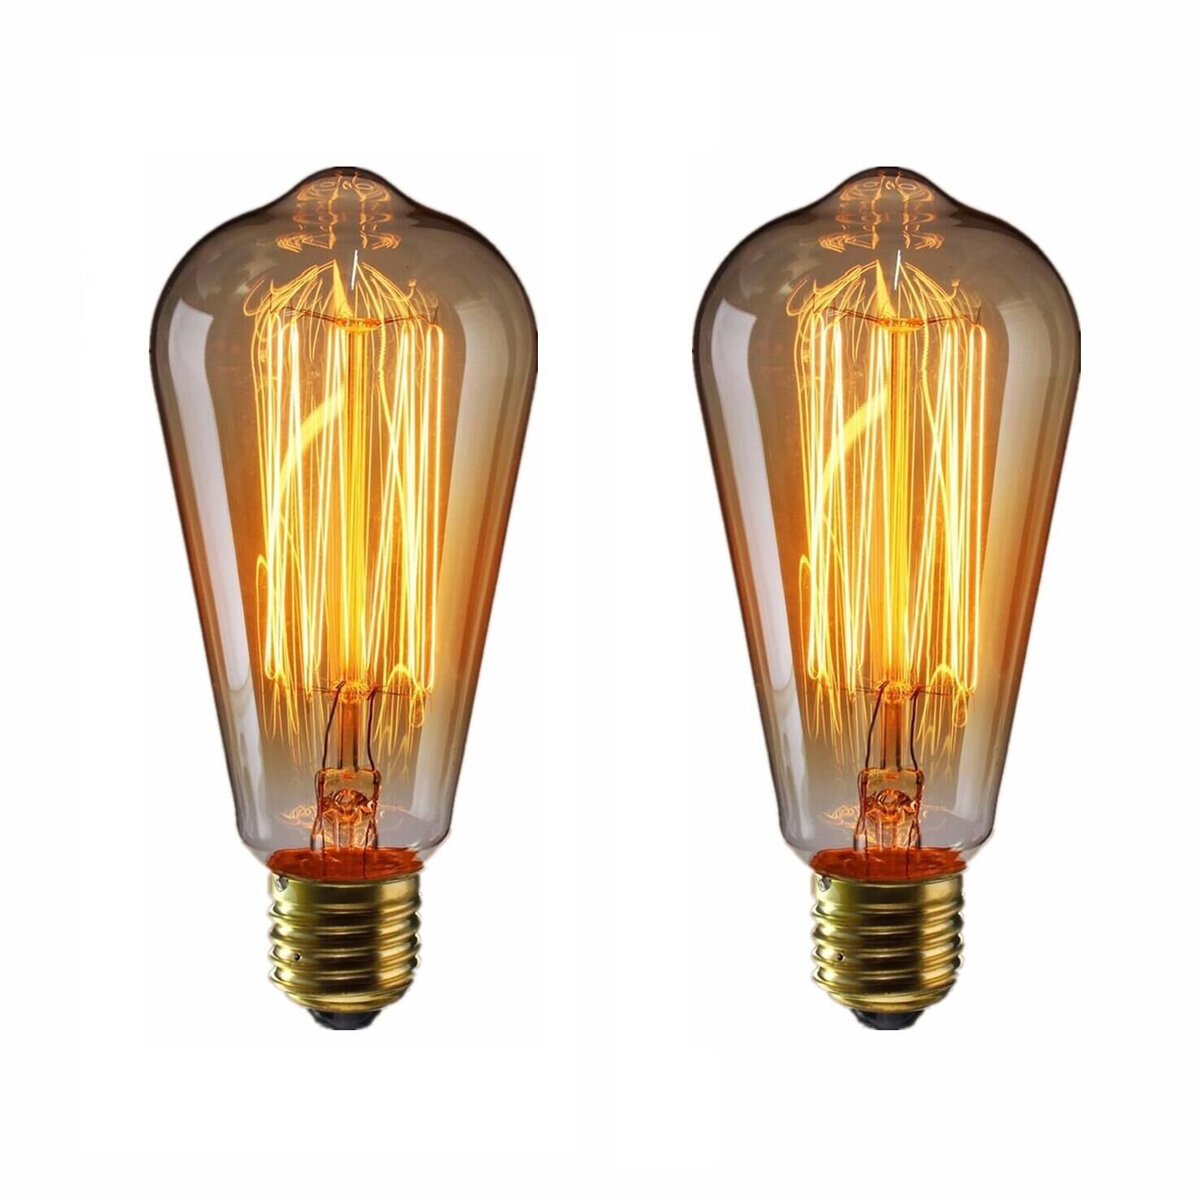 KINGSO 2 Stks/pak E27 Edison Gloeilamp Vintage Lamp Filament Retro ST64 40W 110V Warm Wit Ideaal voor Decoratie Antiek Lichtpunt